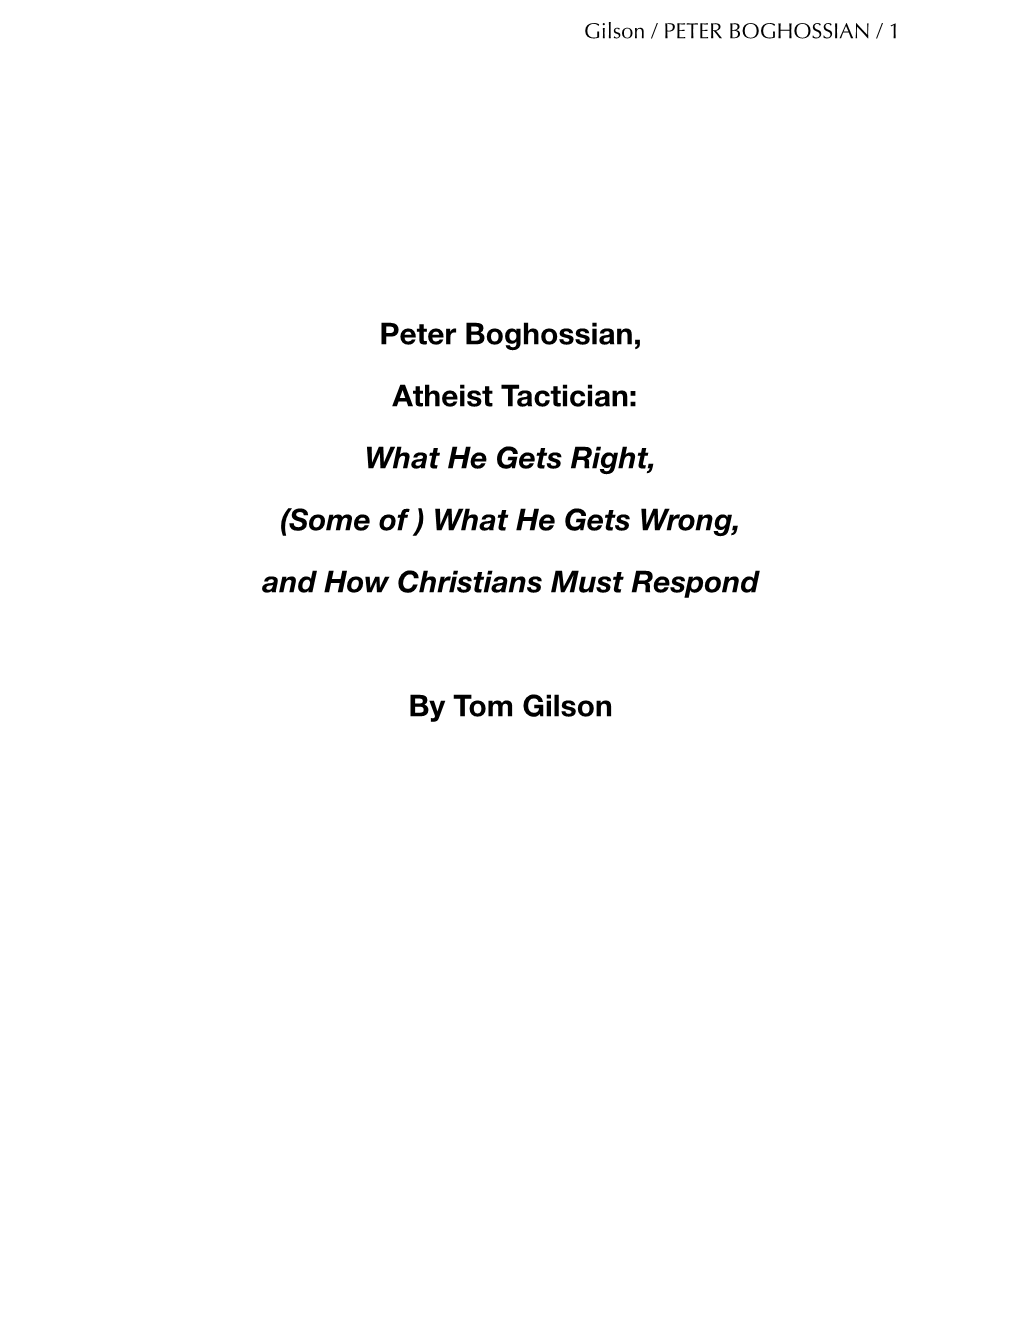 Peter Boghossian, Atheist Tactiction